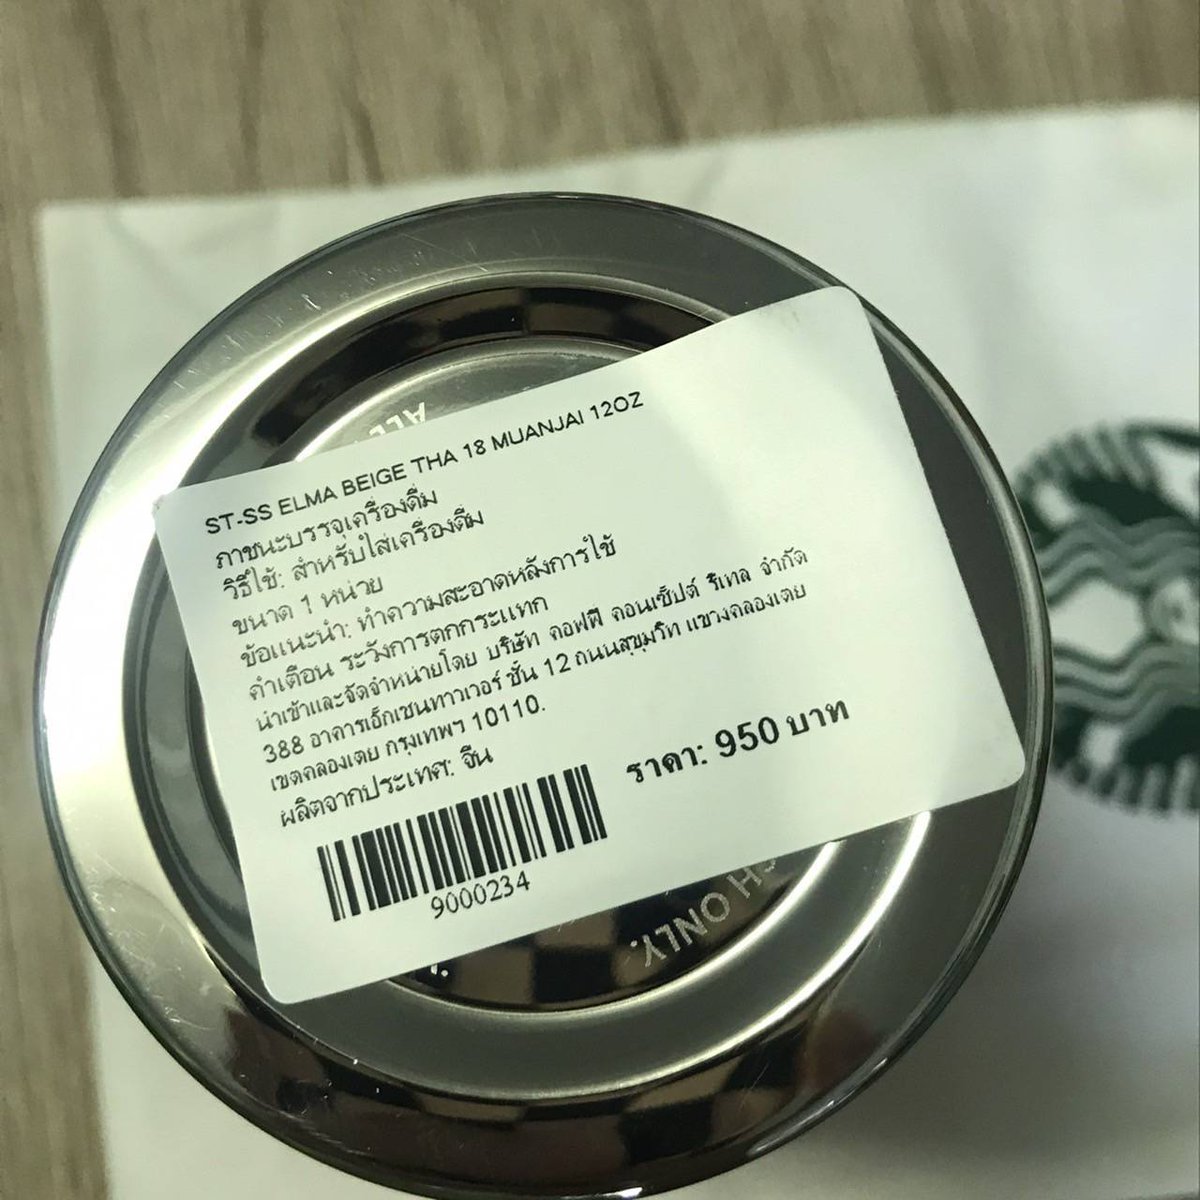 ✳︎ ส่งต่อแก้วสตาร์บัค(ของแท้)✳︎
﹏  ราคา 599 ฿ (จาก950)
﹏  มือหนึ่ง ไม่เคยใช้
﹏  มีถุงผ้าให้
#แก้วstarbucks #Starbucks #ส่งต่อของมือสอง #ส่งต่อStarbucks #ส่งต่อ